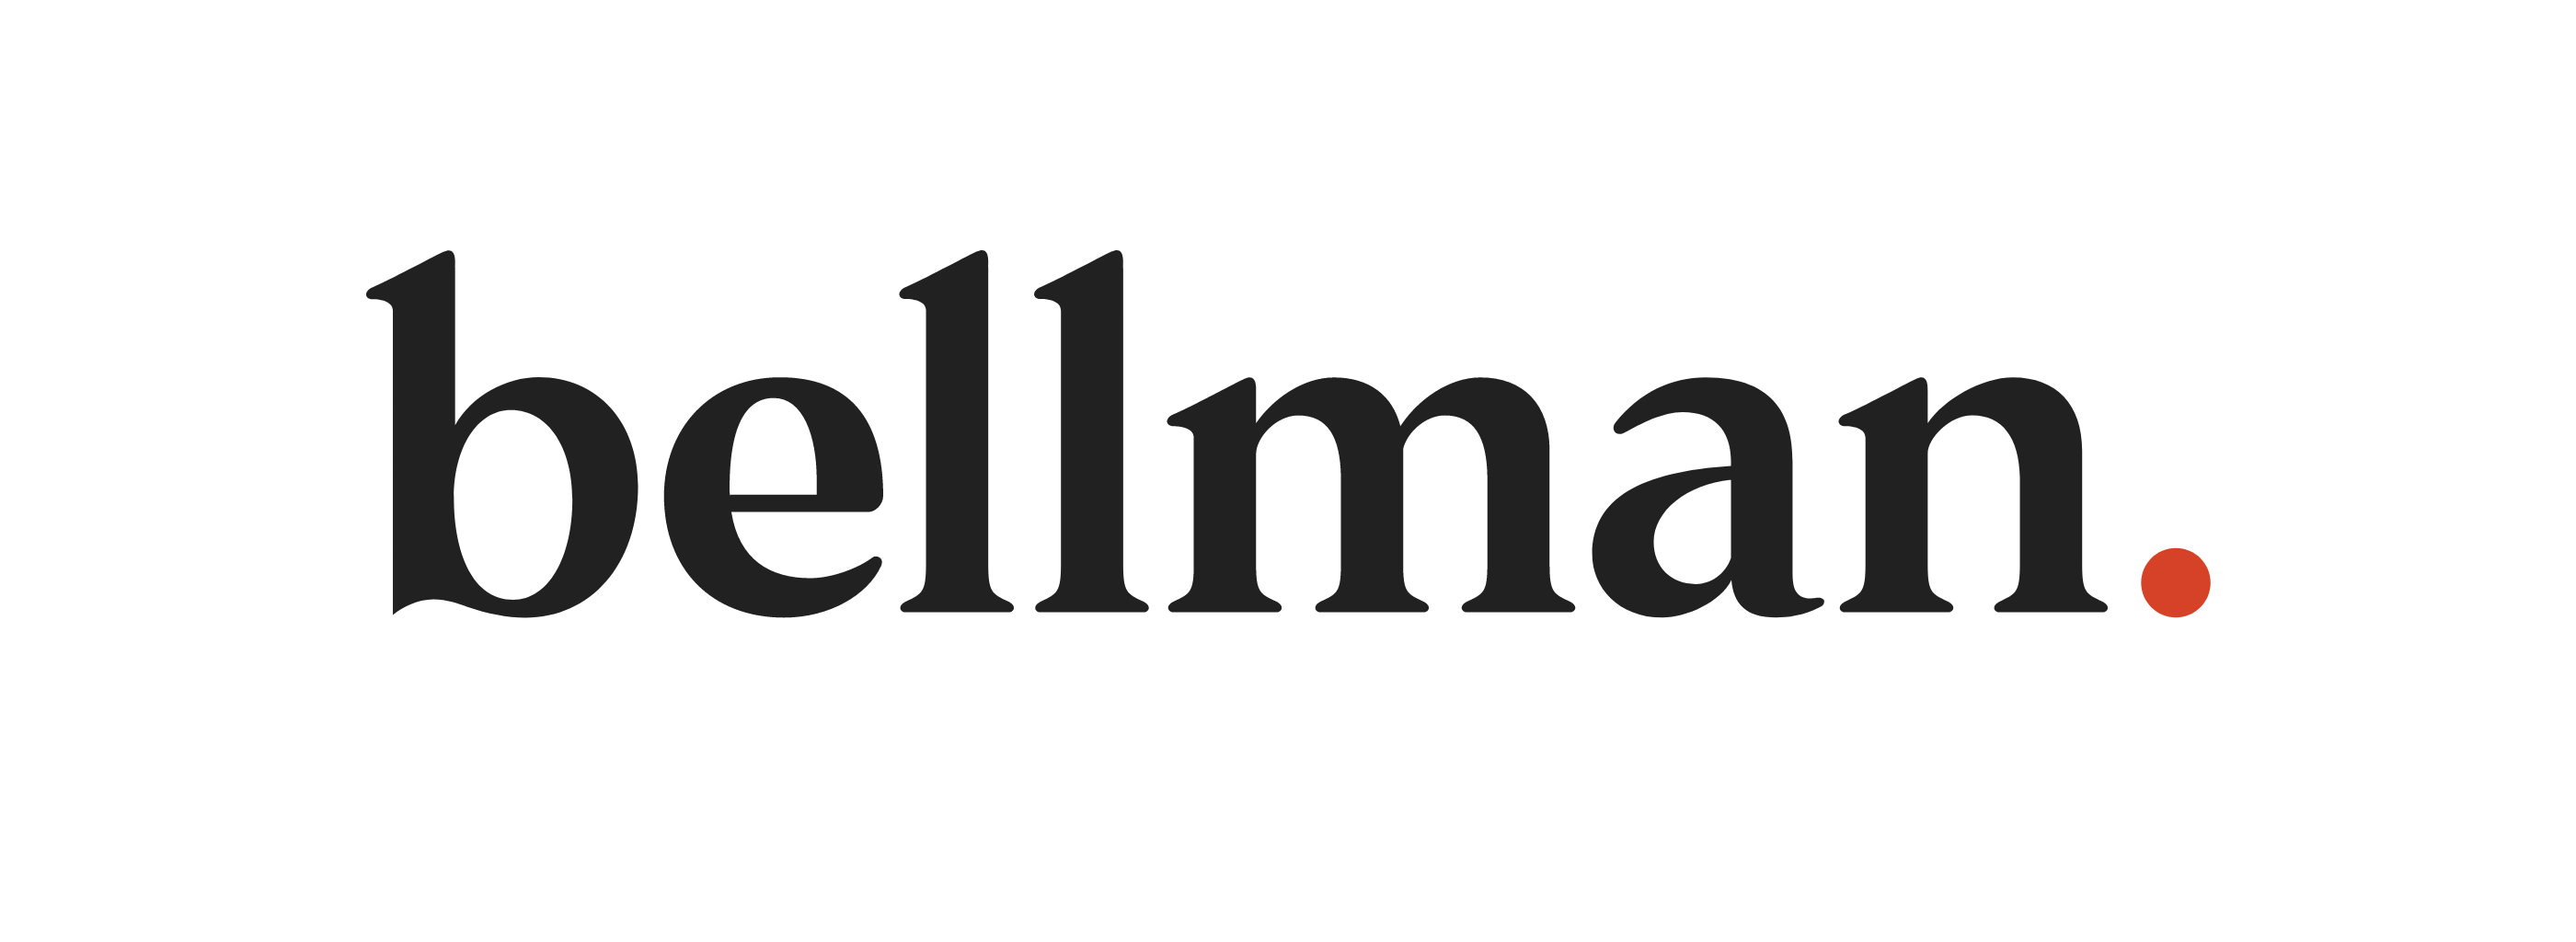 Bellman Business Model